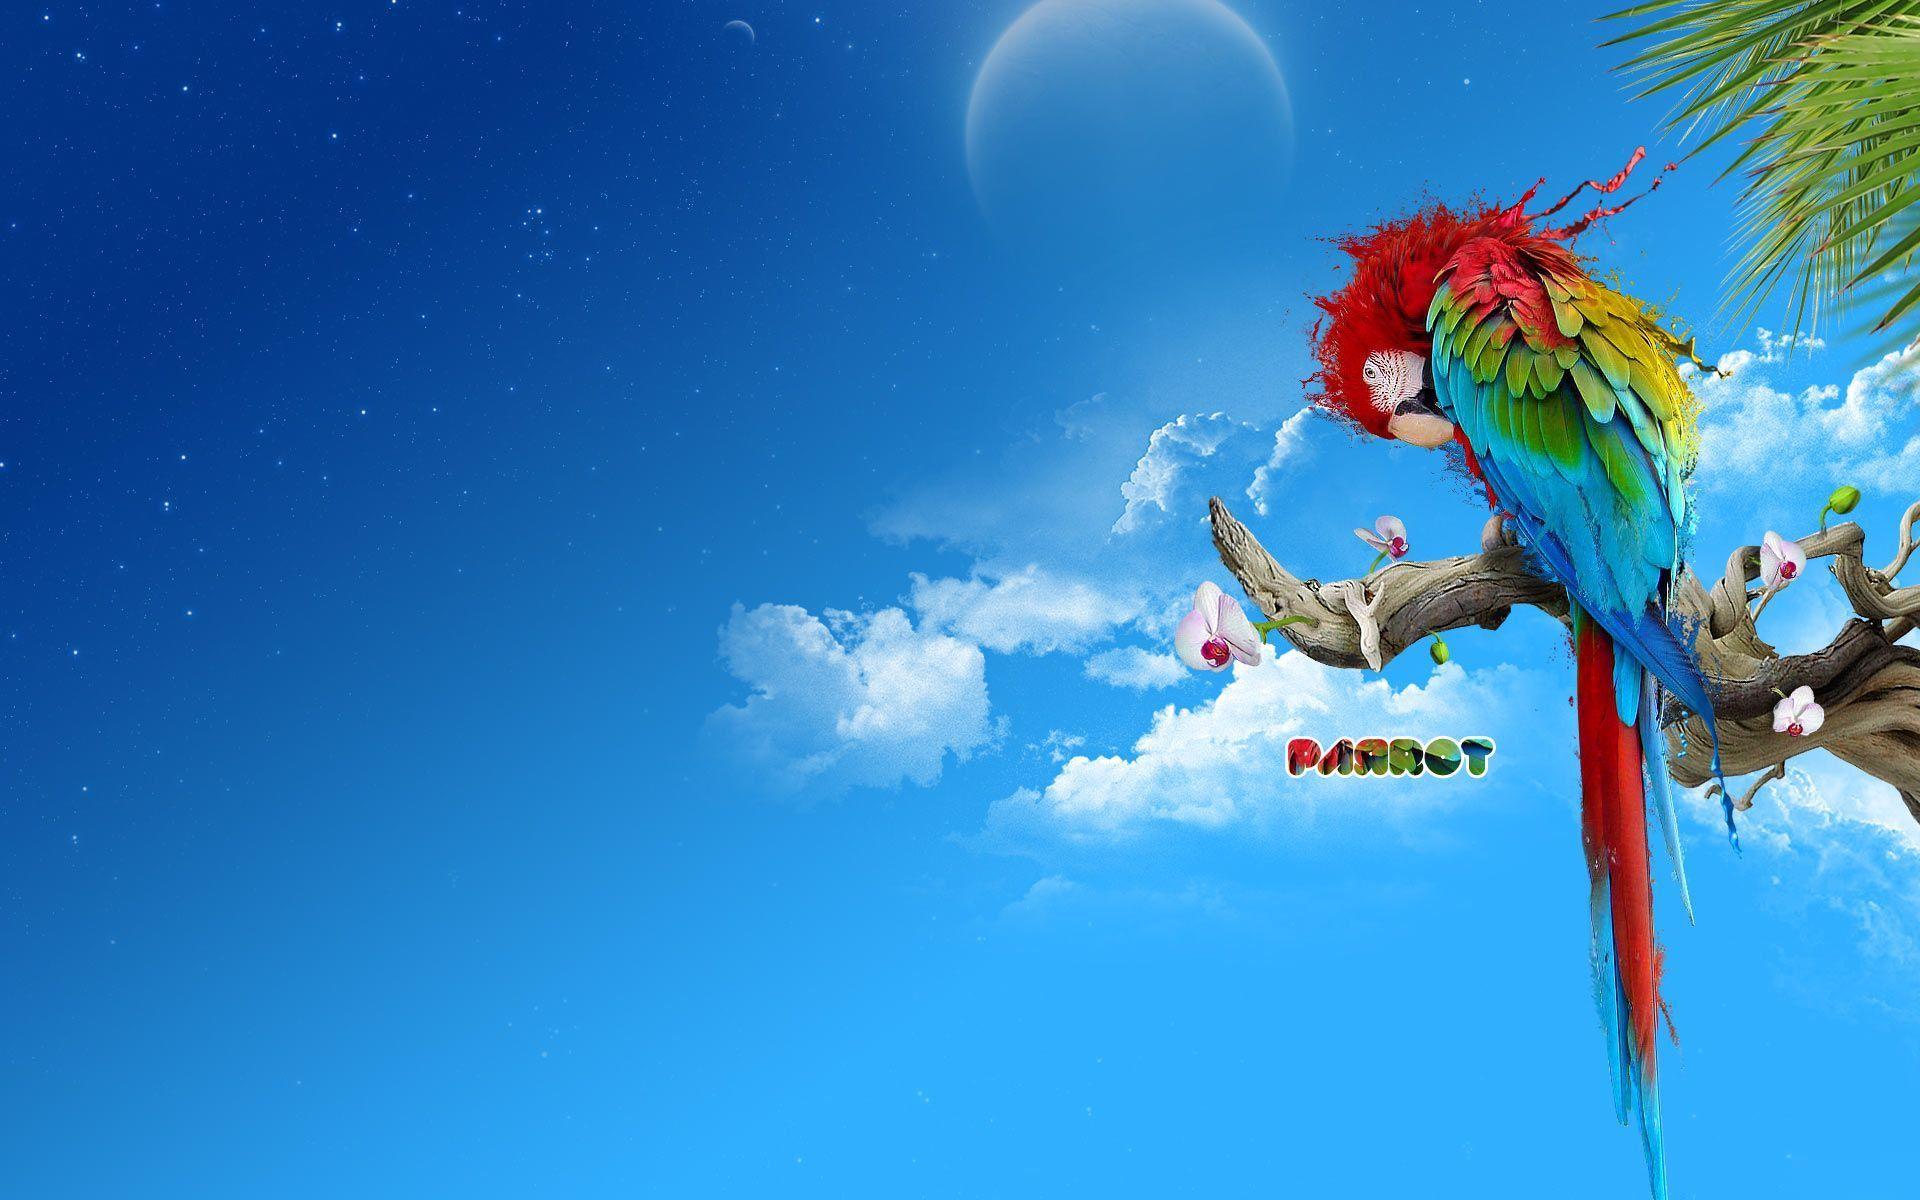 Desktop Wallpaper · Gallery · Windows 7 · Scarlet Macaw Parrot